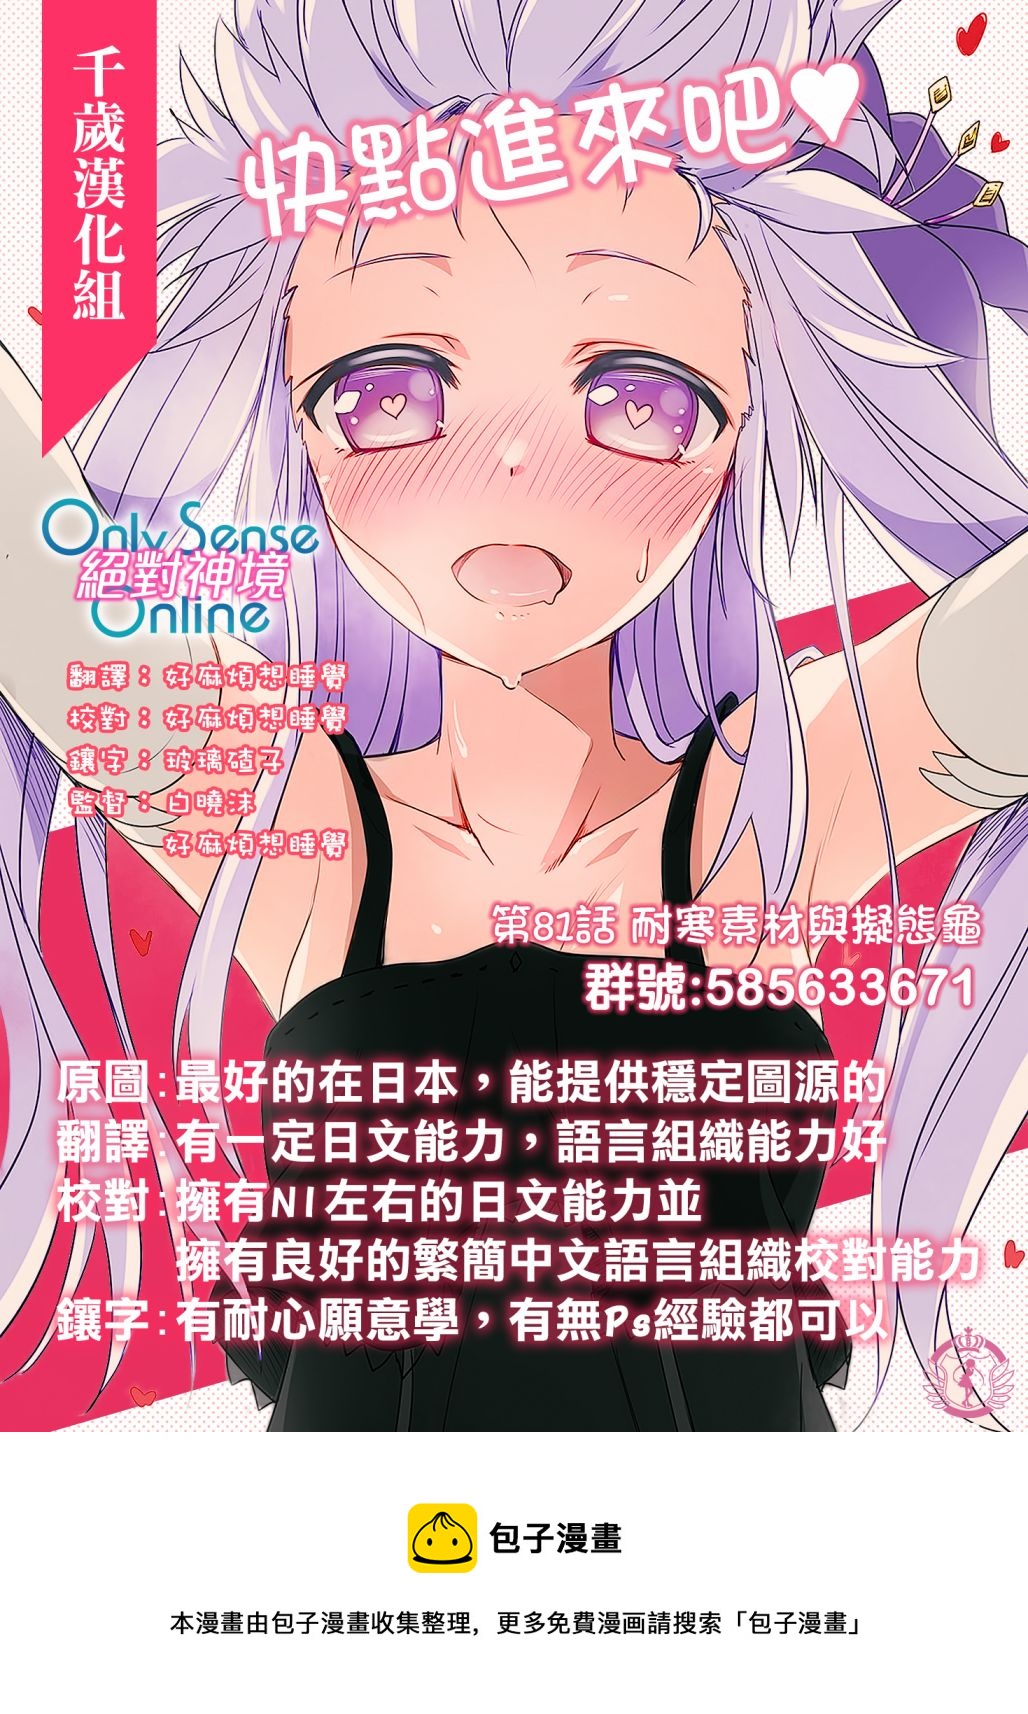 Only Sense Online - 第81話 - 1